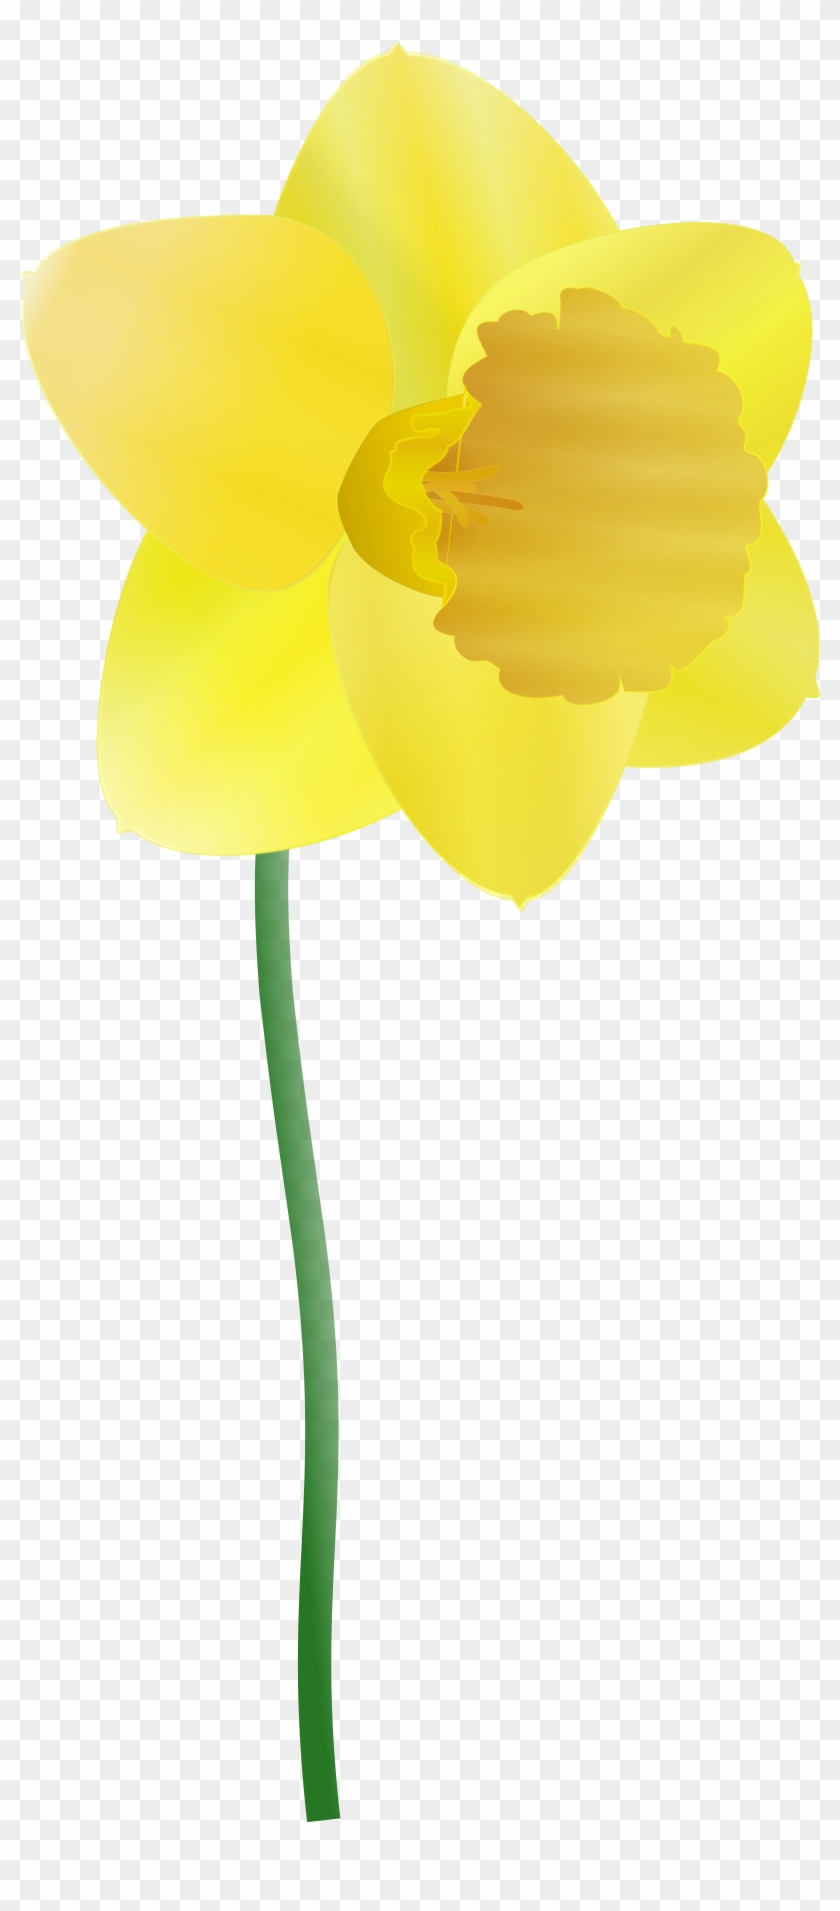 Royalty Free Daffodil Clipart - Daffodil Clipart #291586